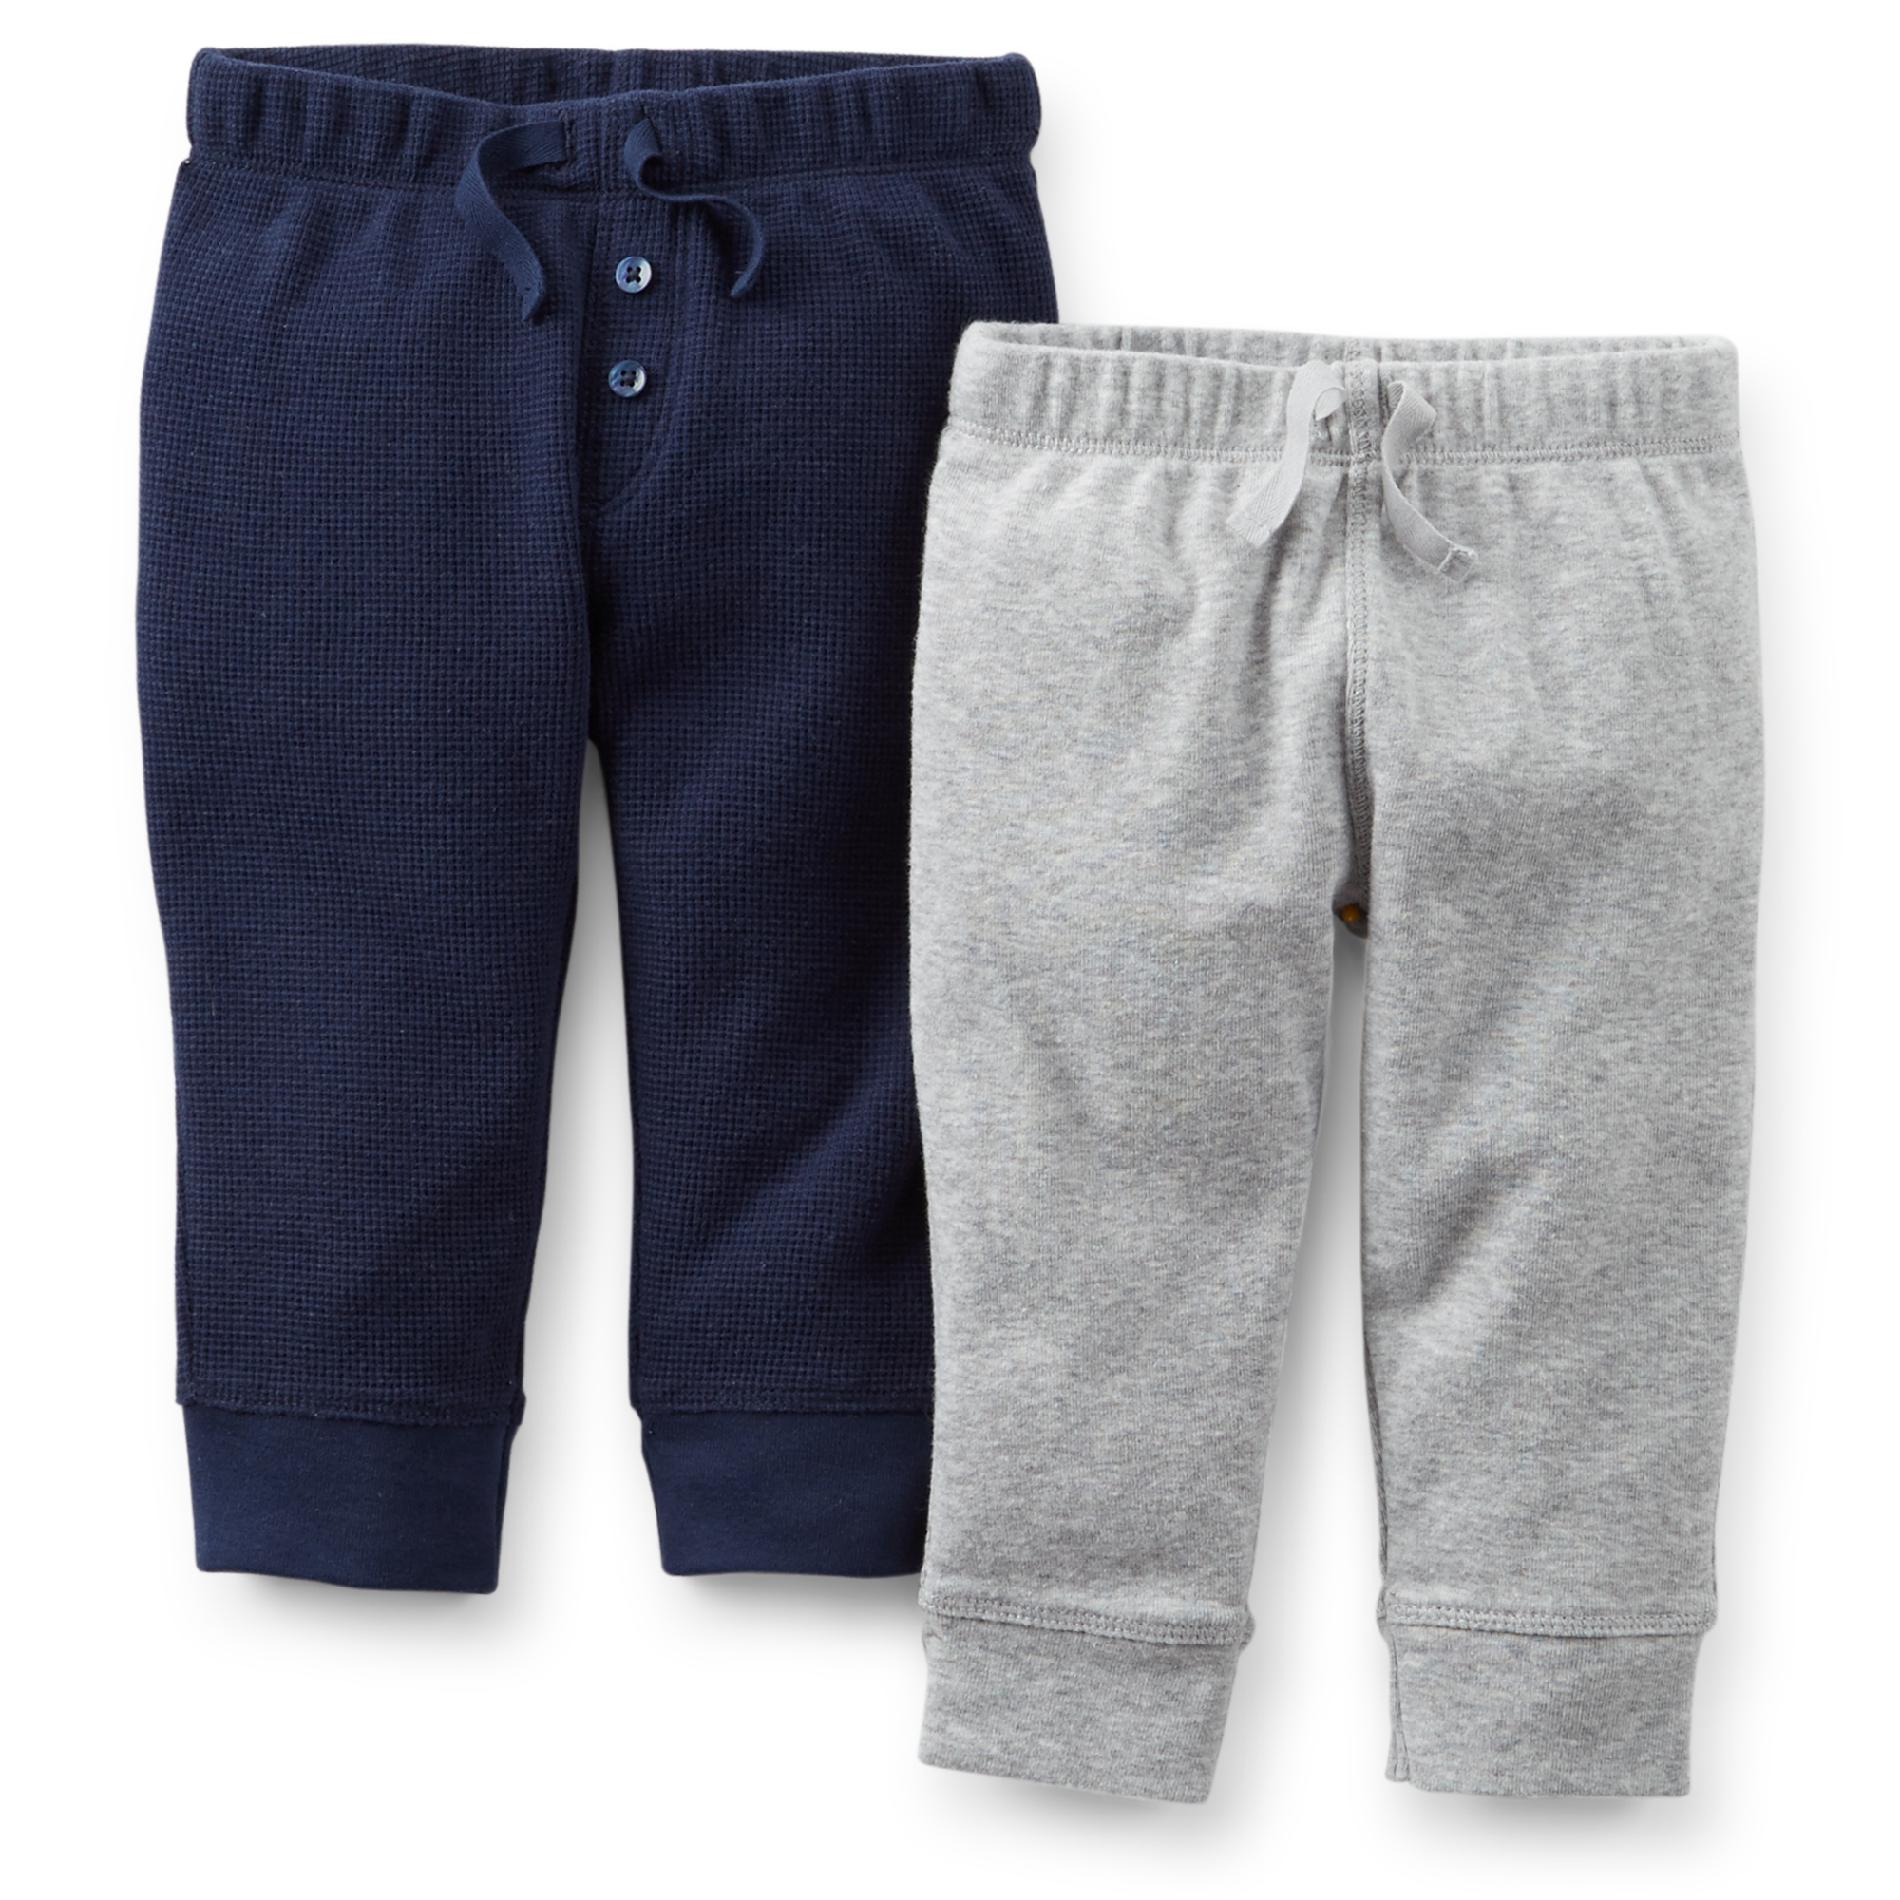 Carter's Newborn & Infant Boy's Set of 2 Stretch Pants.